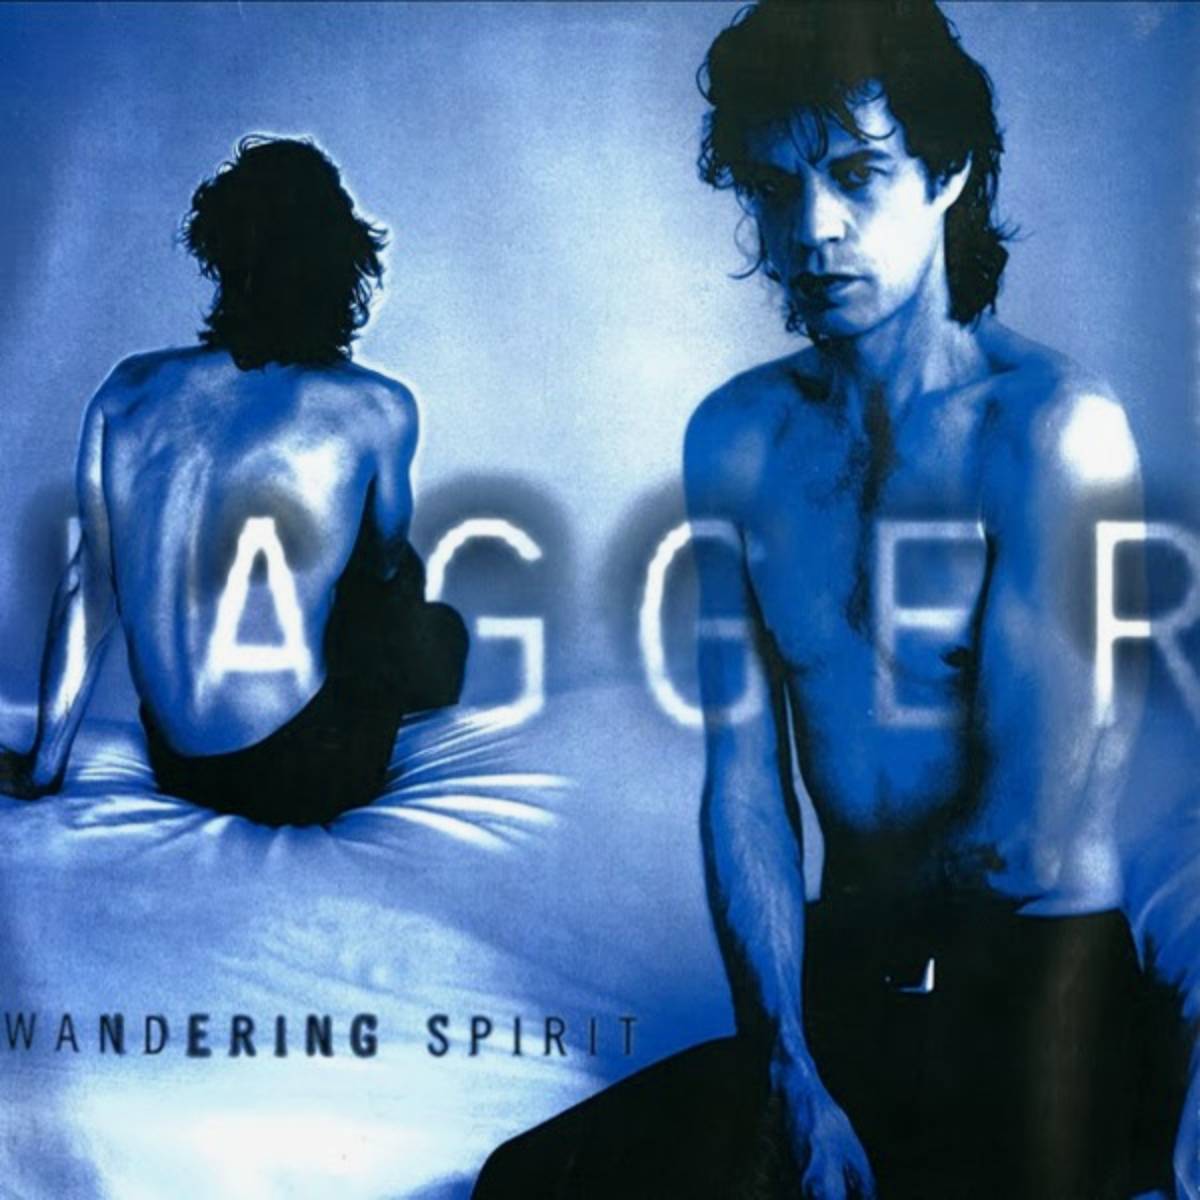 Mick Jagger - "Esprit vagabond" (1993)